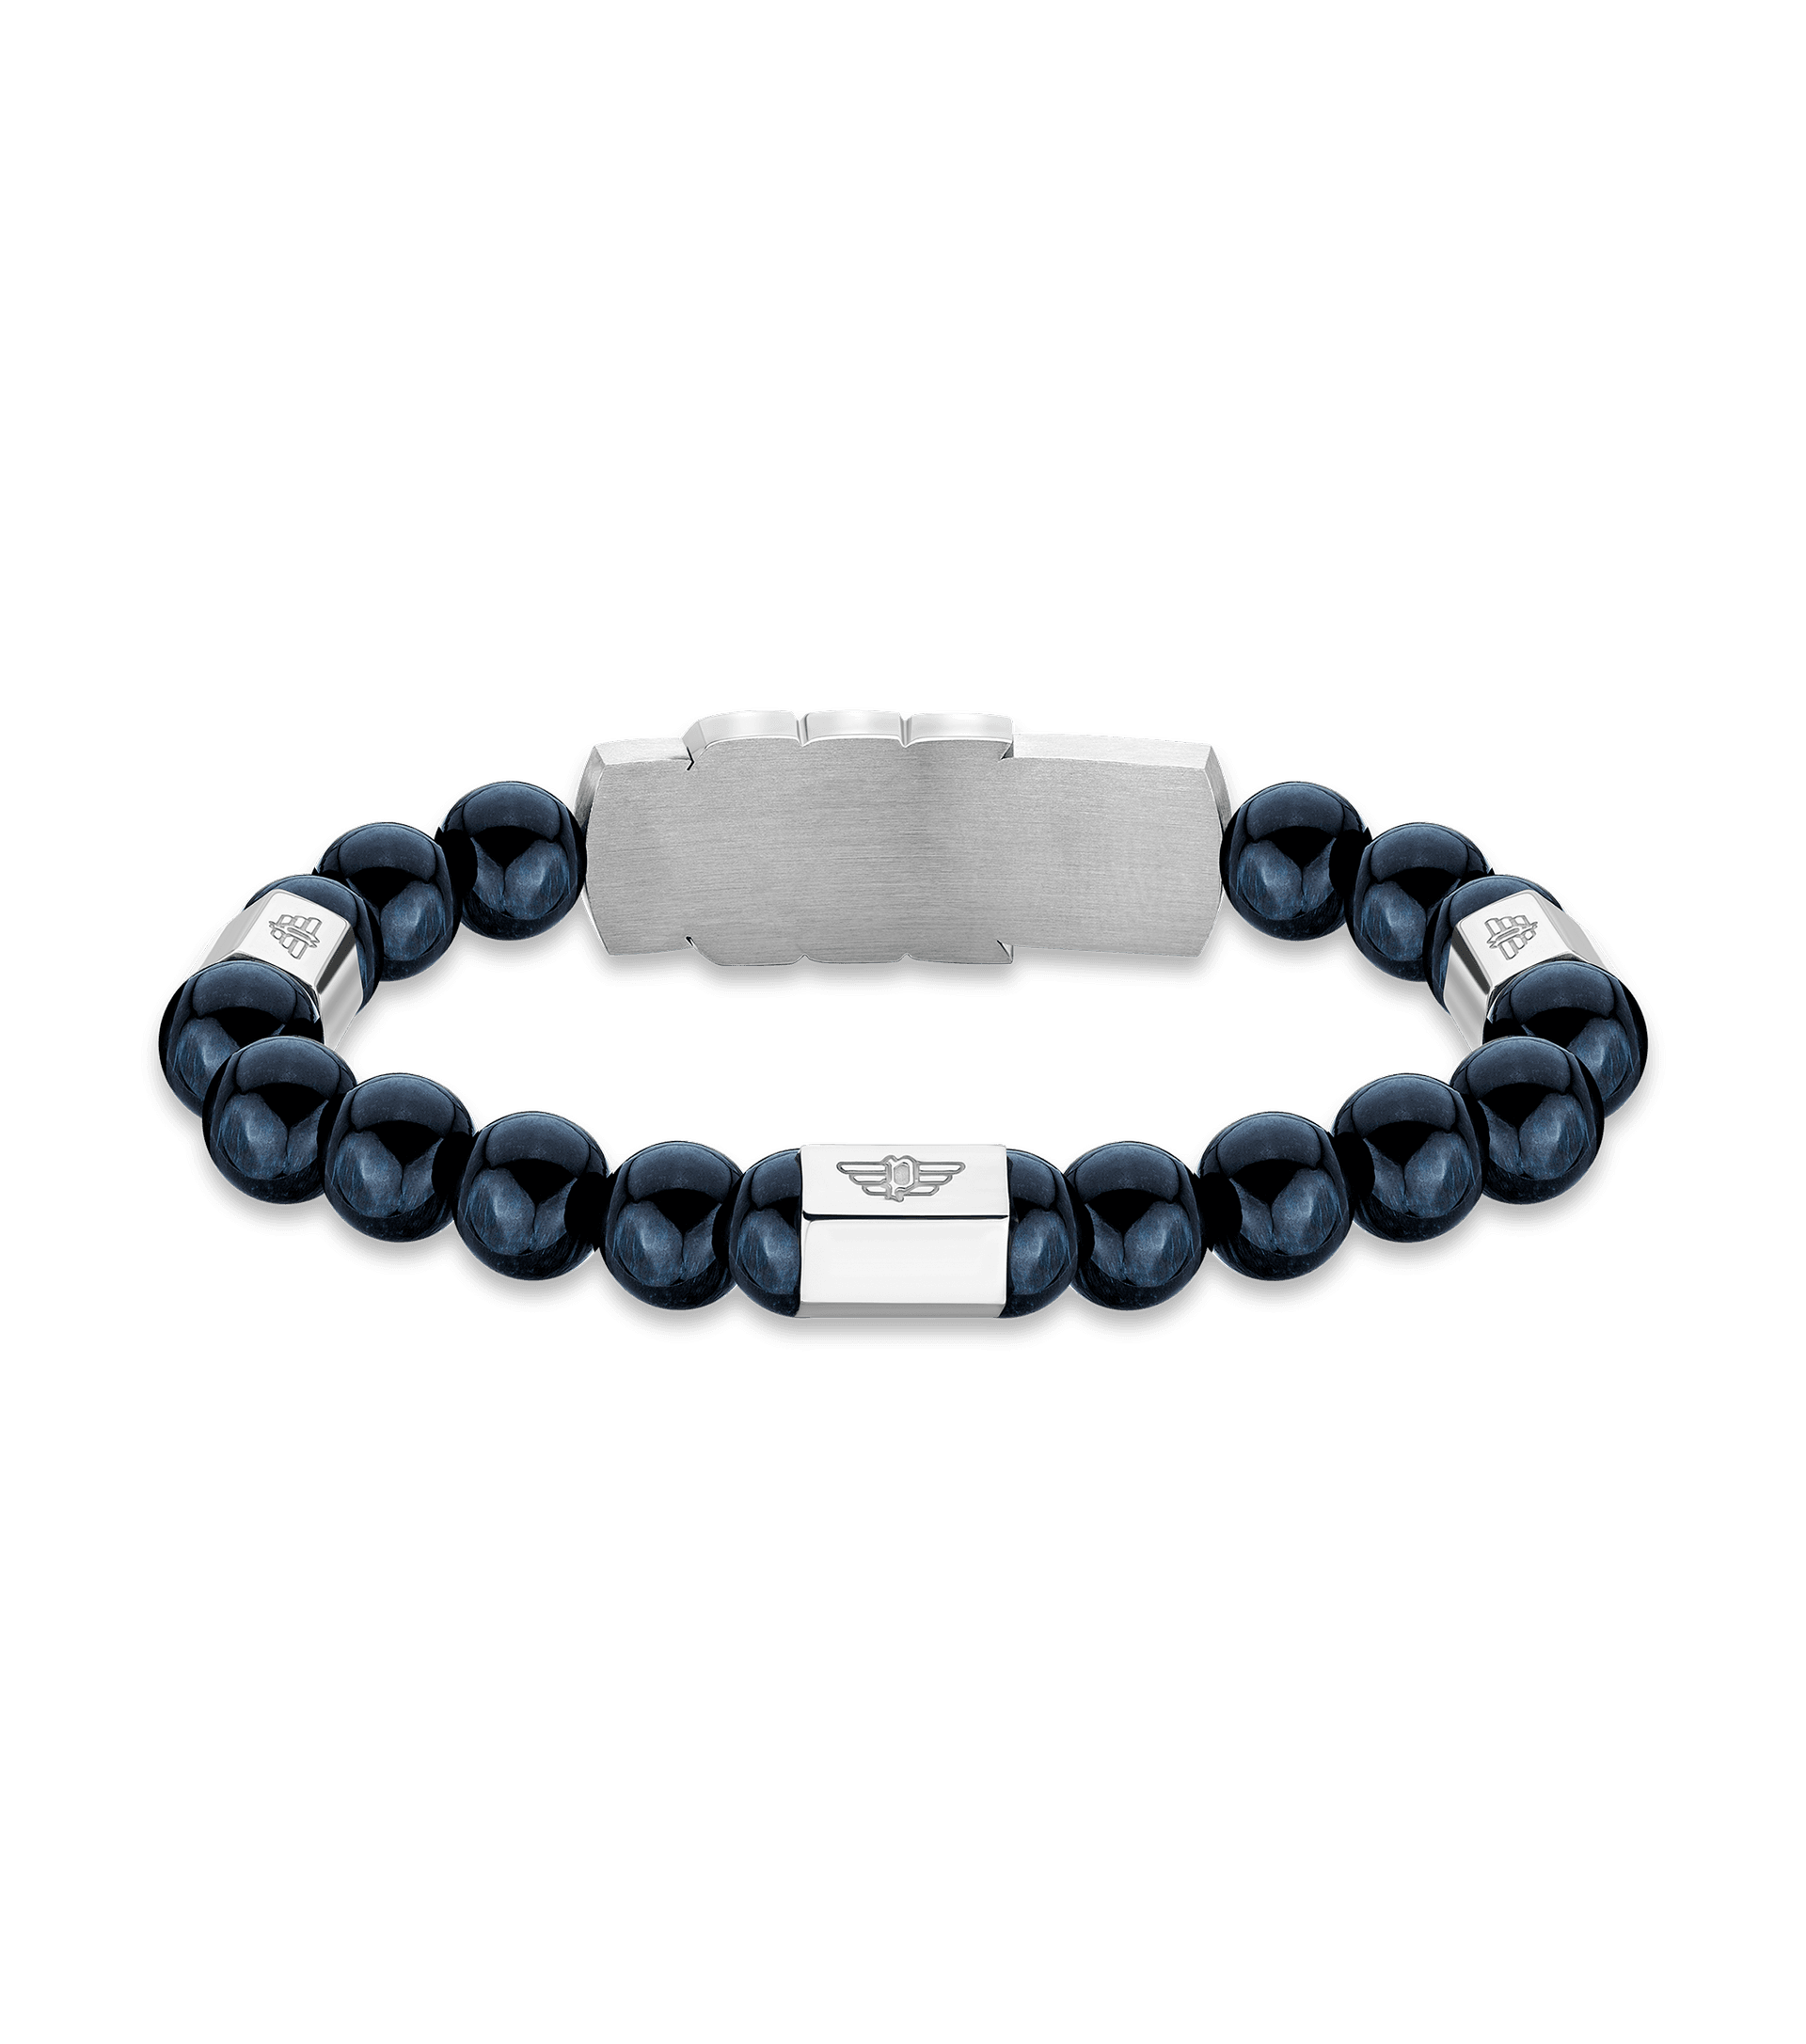 Police jewels - Valorious Armband PEAGB2120322 Von Für Männer Police